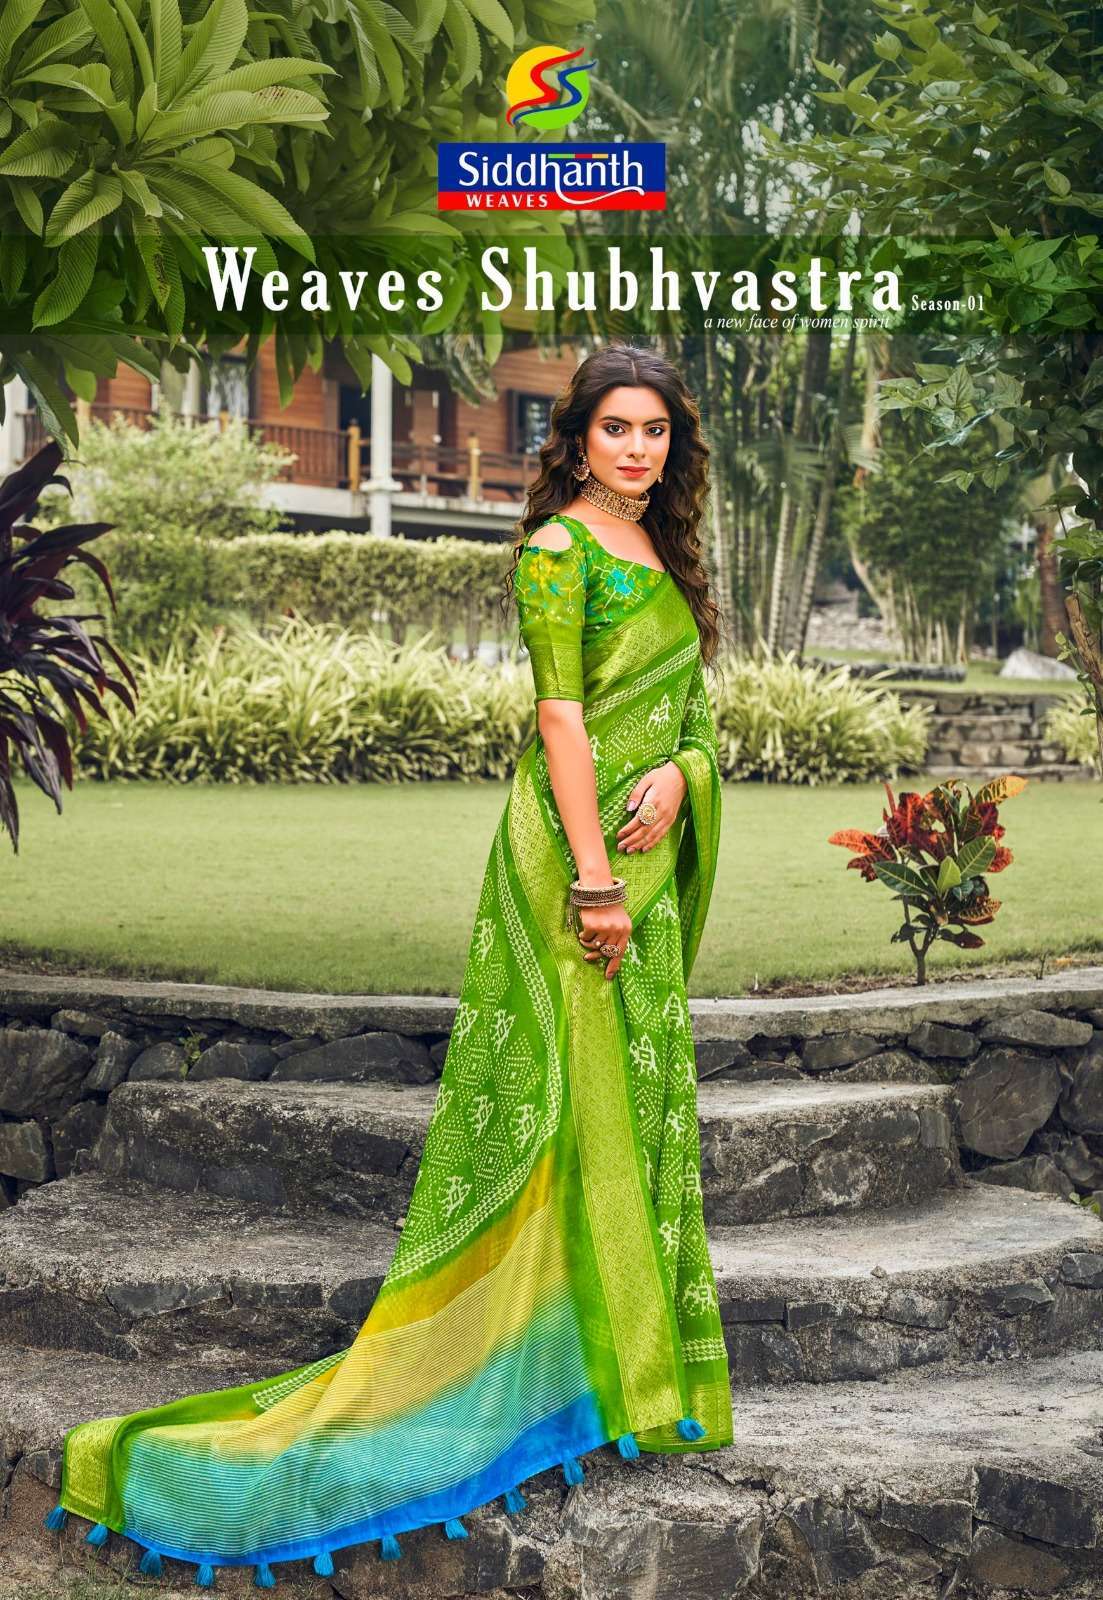 siddhanth weaves subhvastra series 43001-43008 Cotton saree